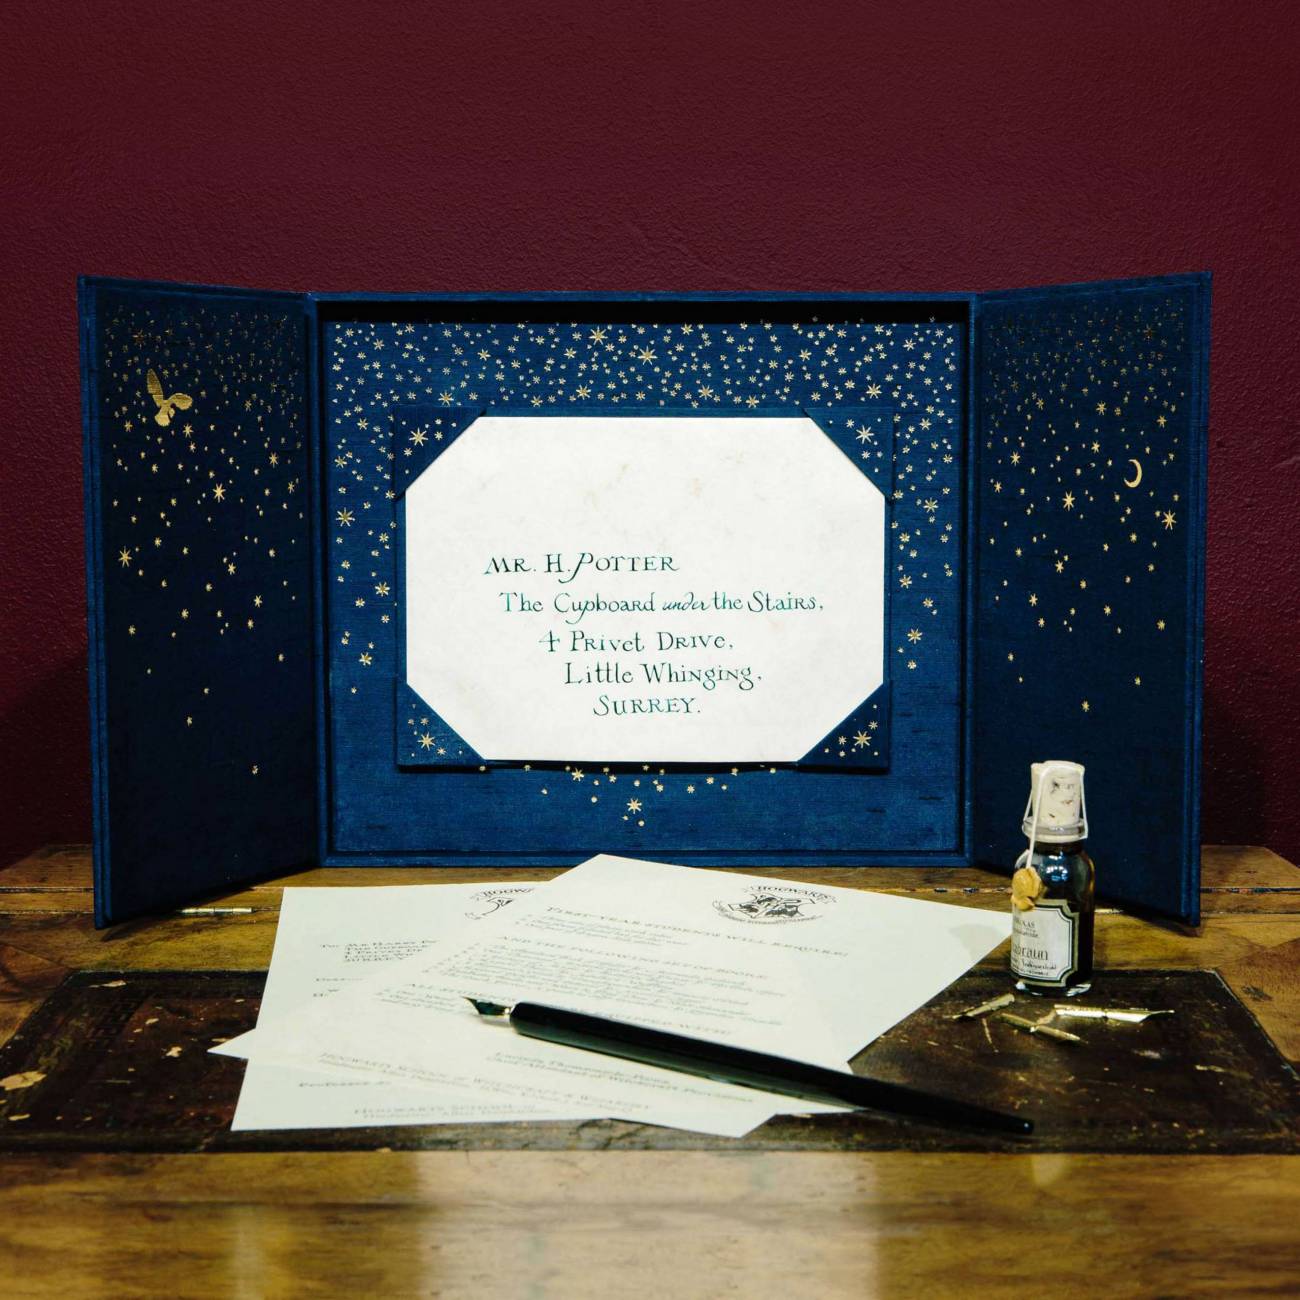 Bluesky Harry Potter Letter Writing Set Feather Stift Mehrfarbig